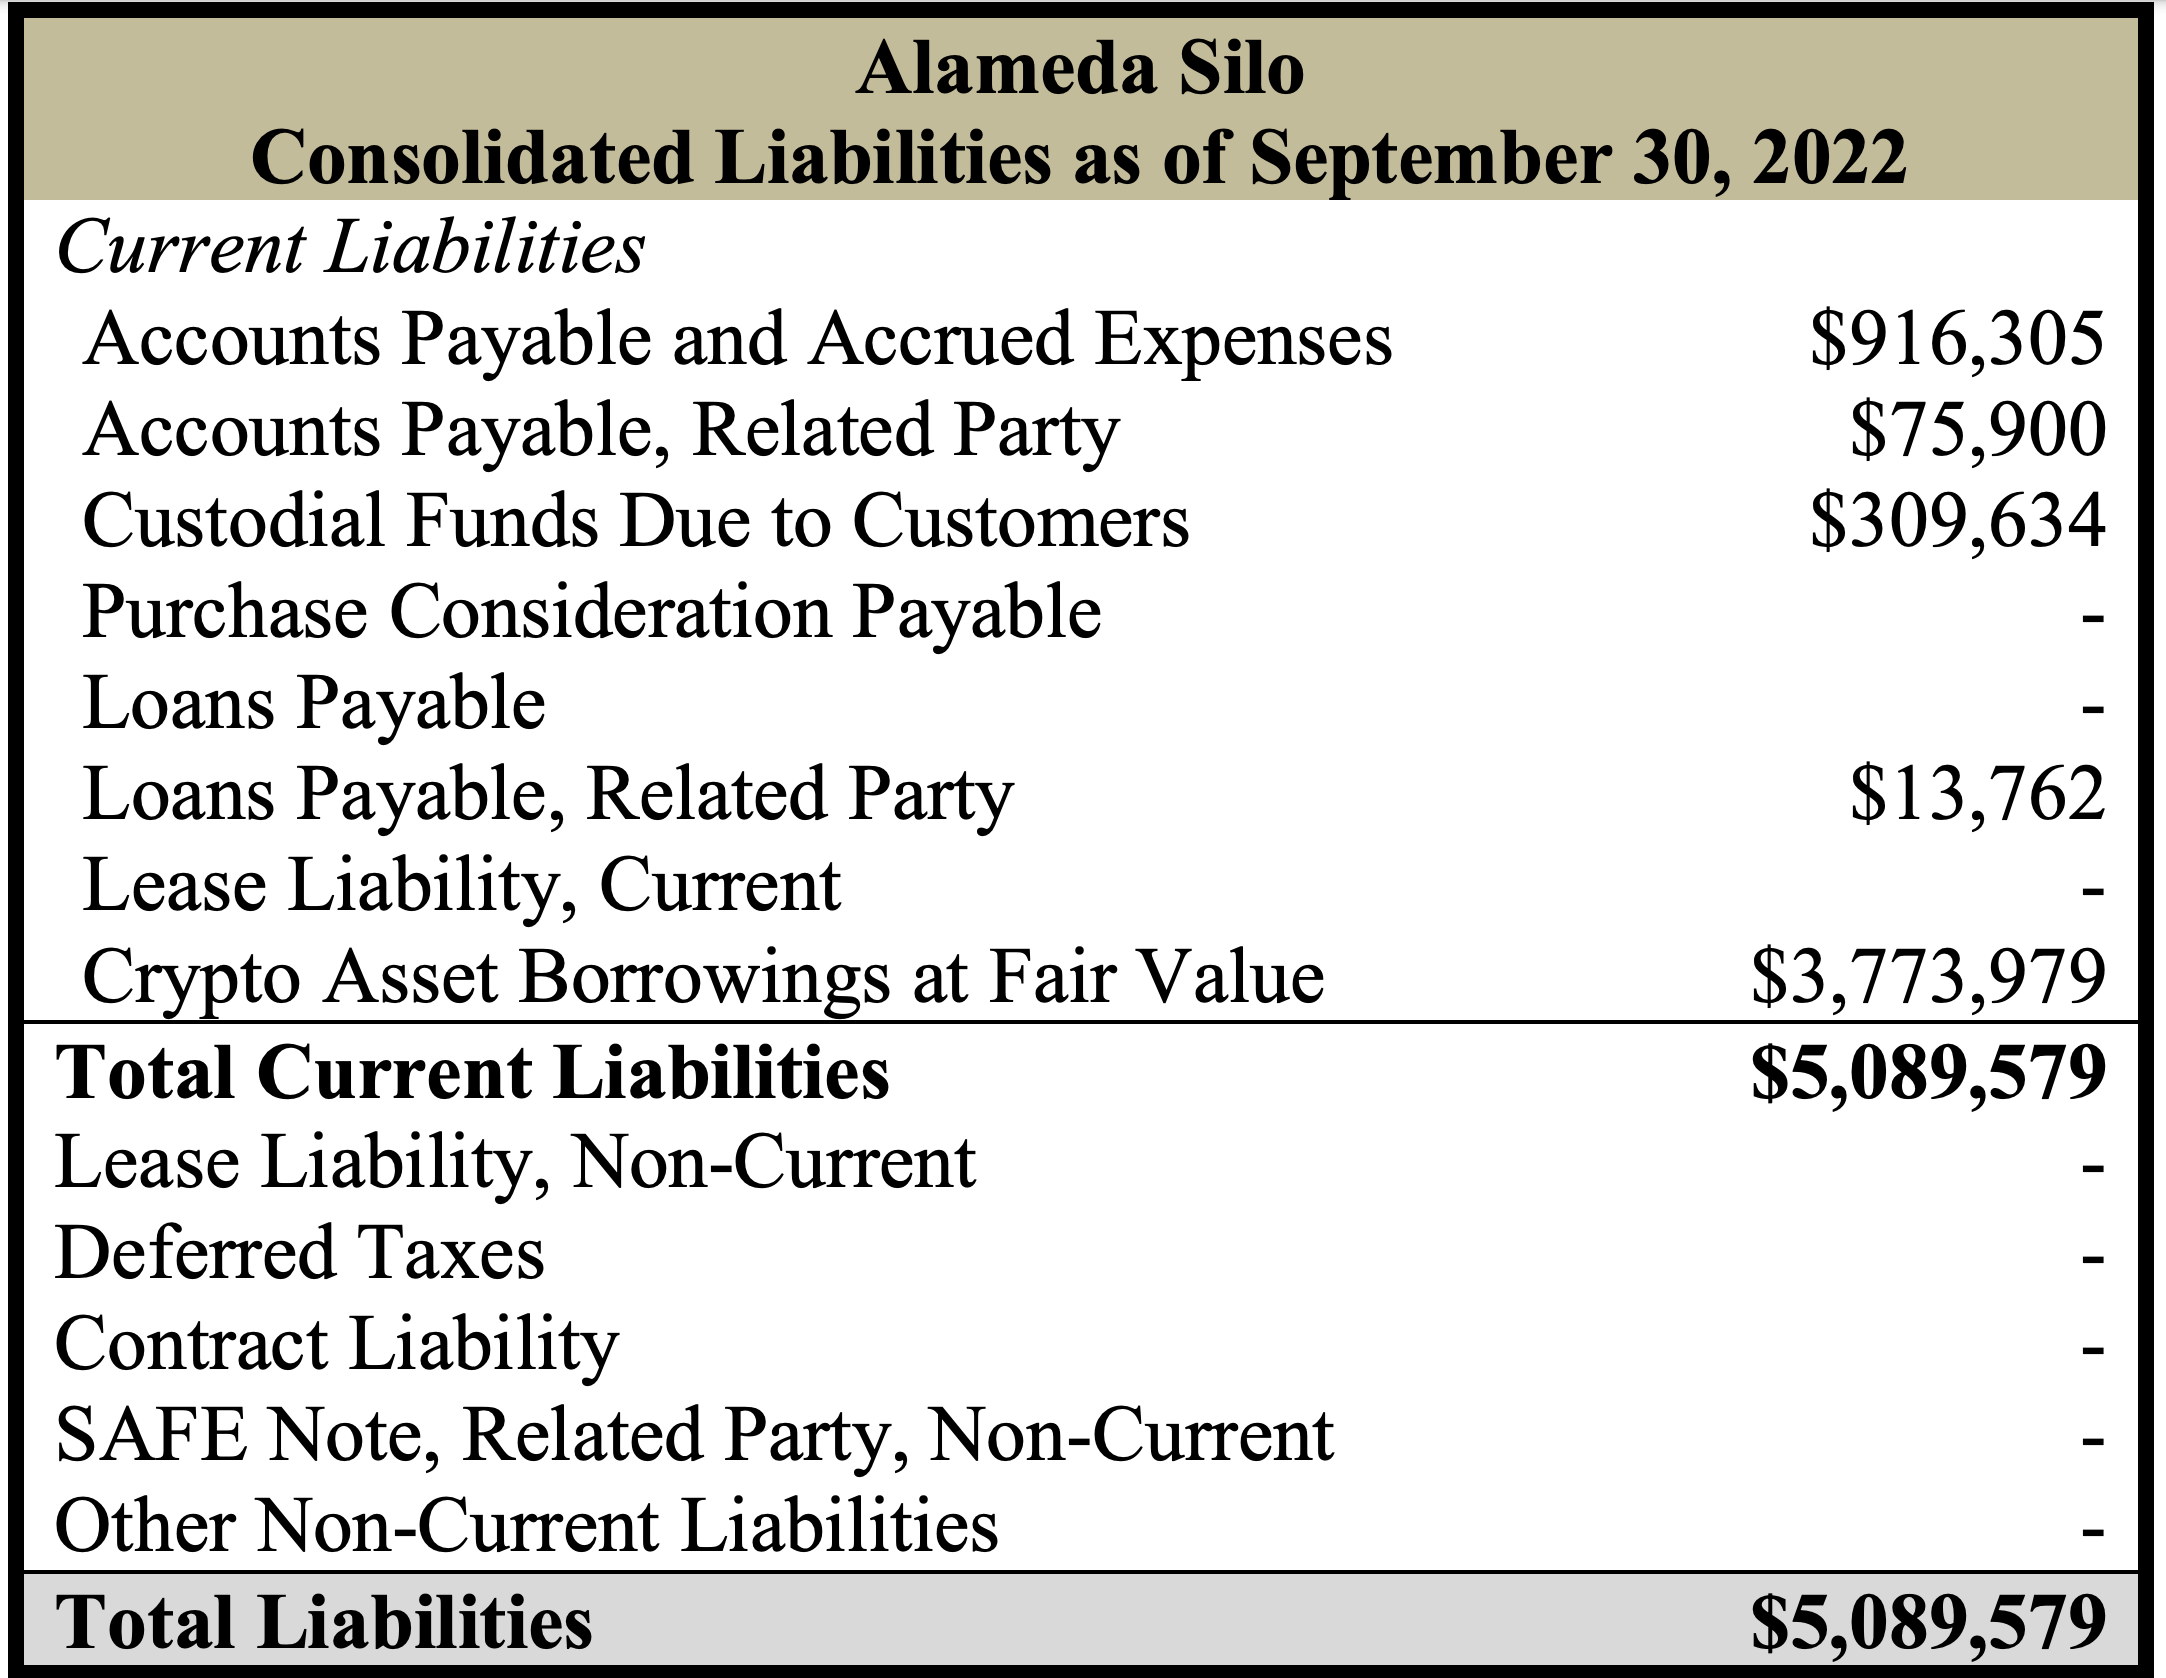 Alameda Silo - Total Liabilities as of Sep 30, 2022